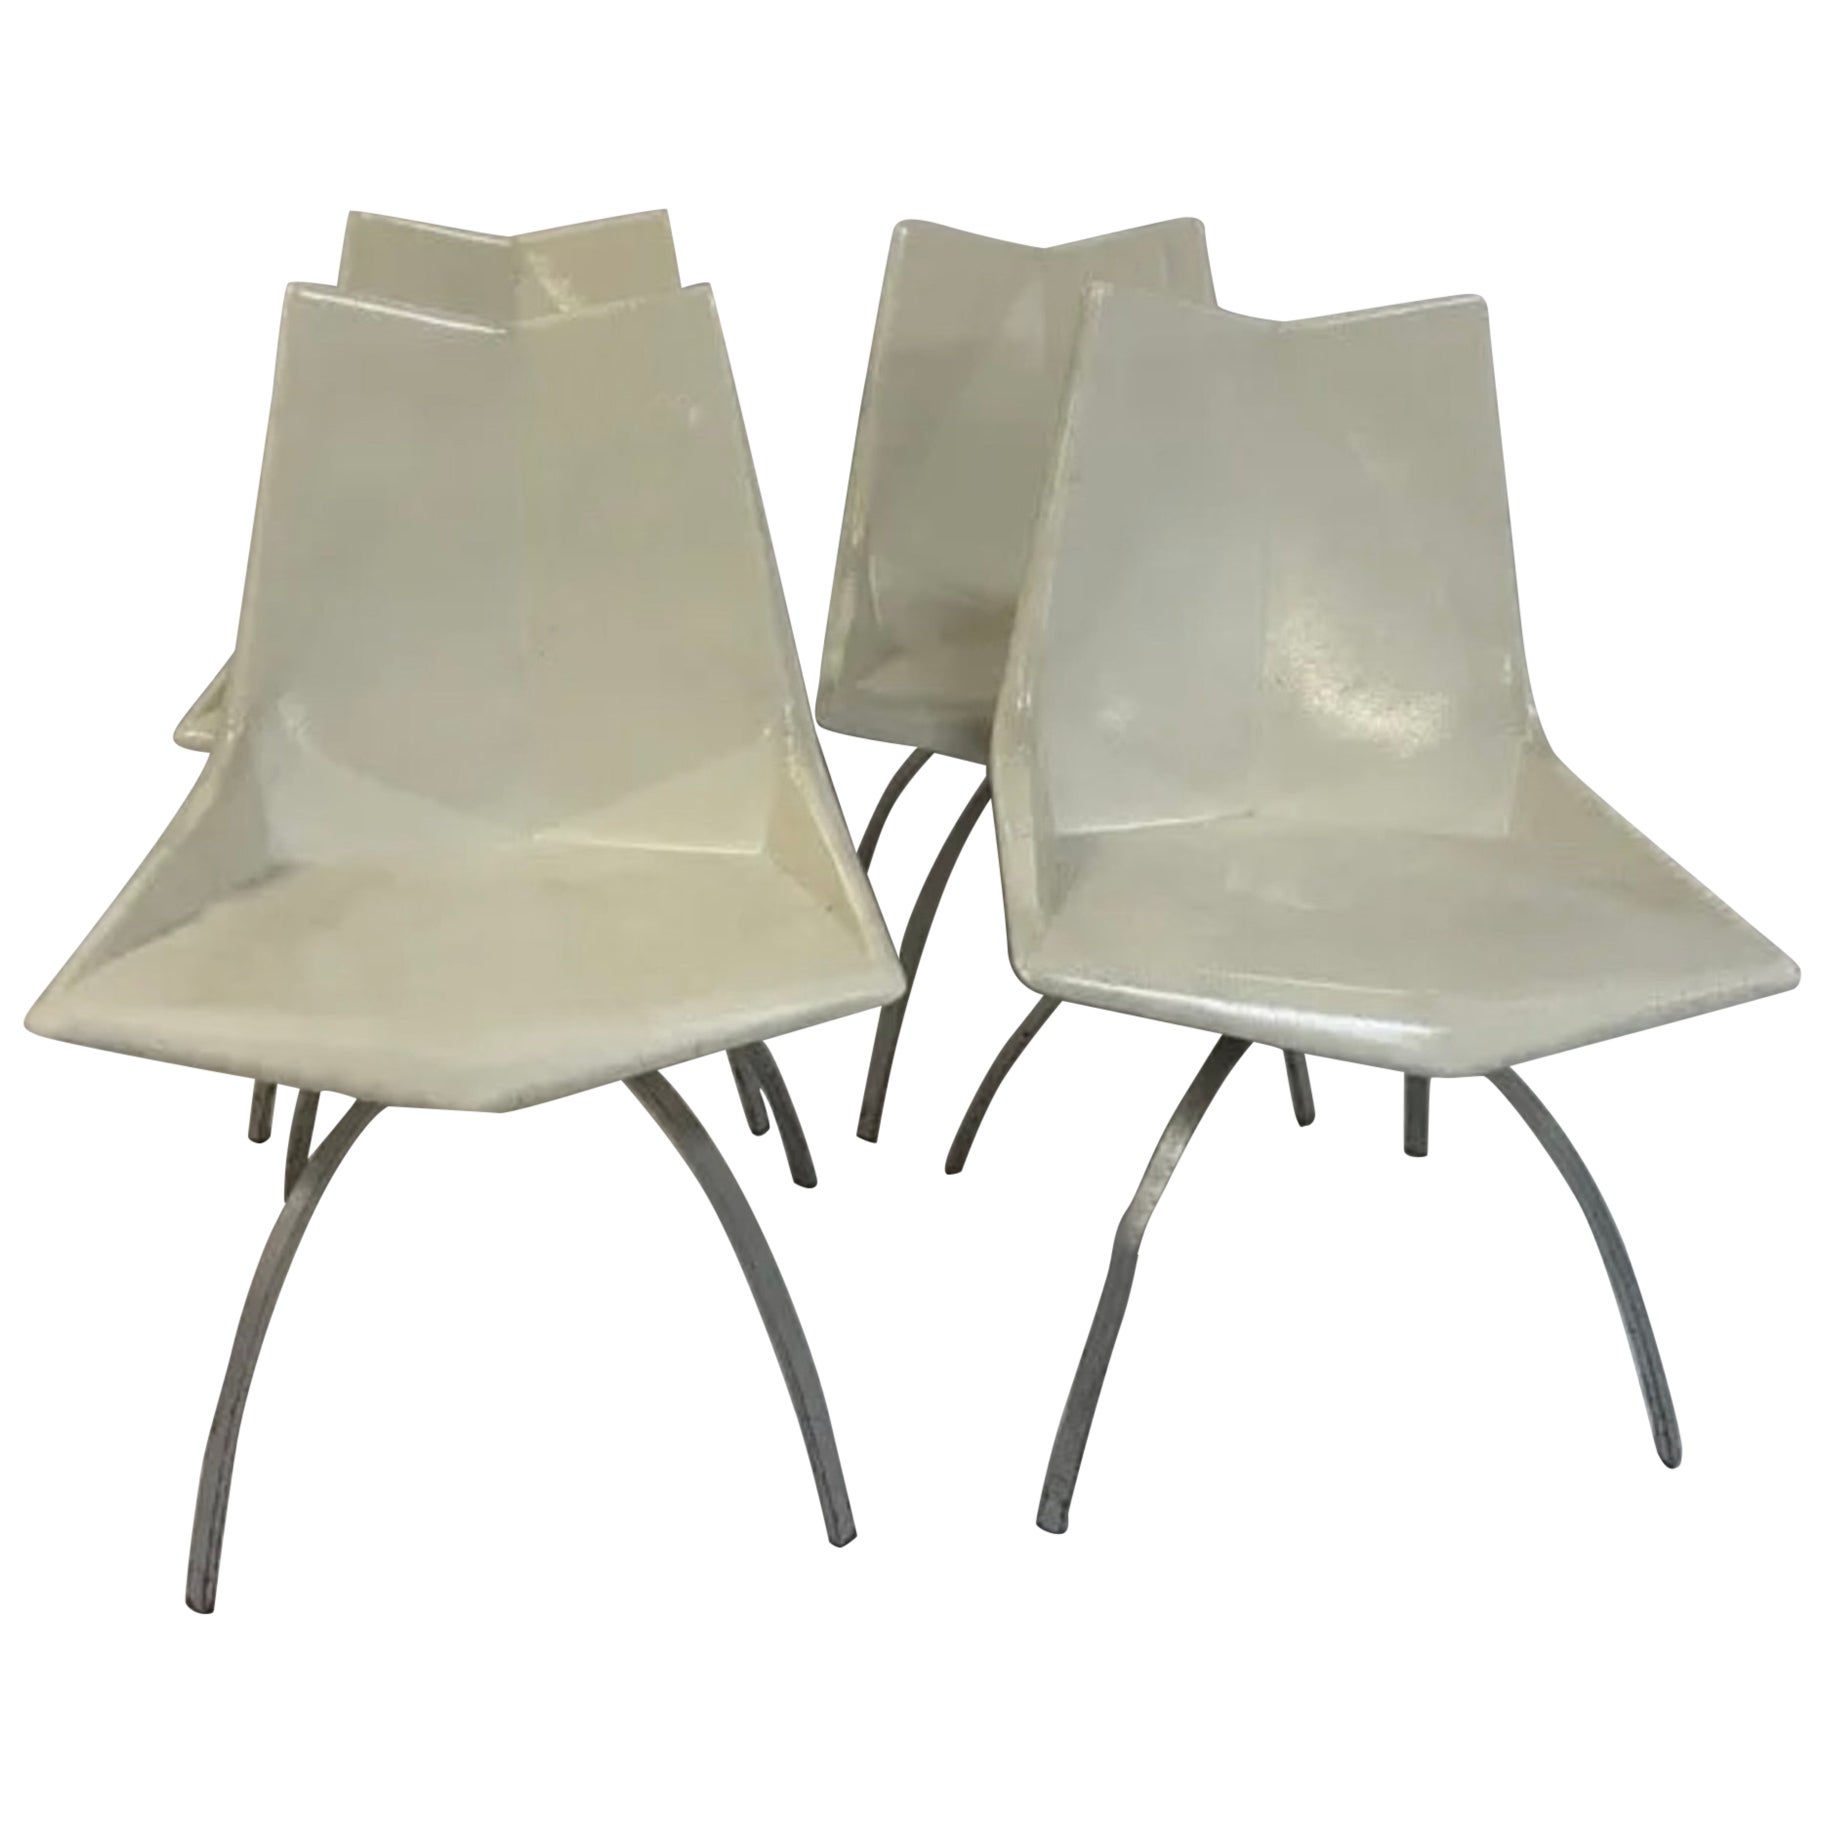 4 Original Midcentury white Paul McCobb Origami Fiberglass Chairs spider base For Sale